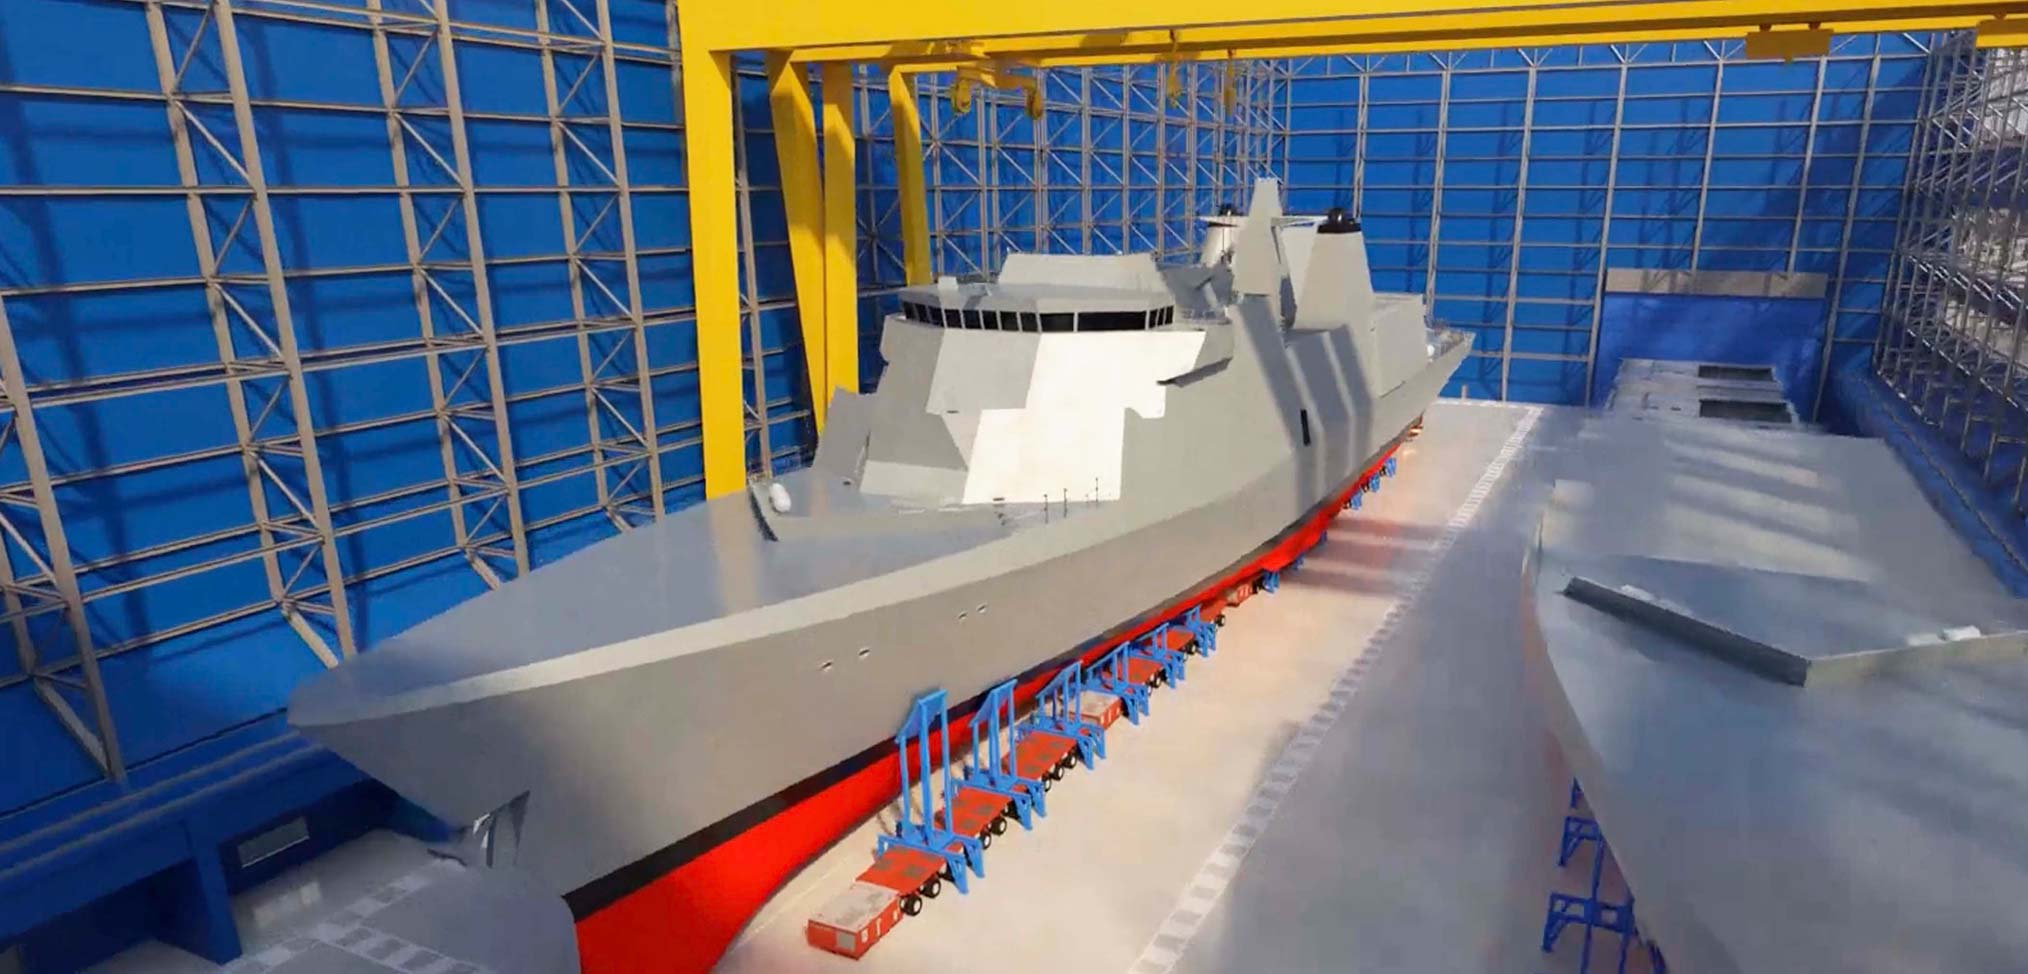 Type 31 frigate benefits from an international shipbuilding programme